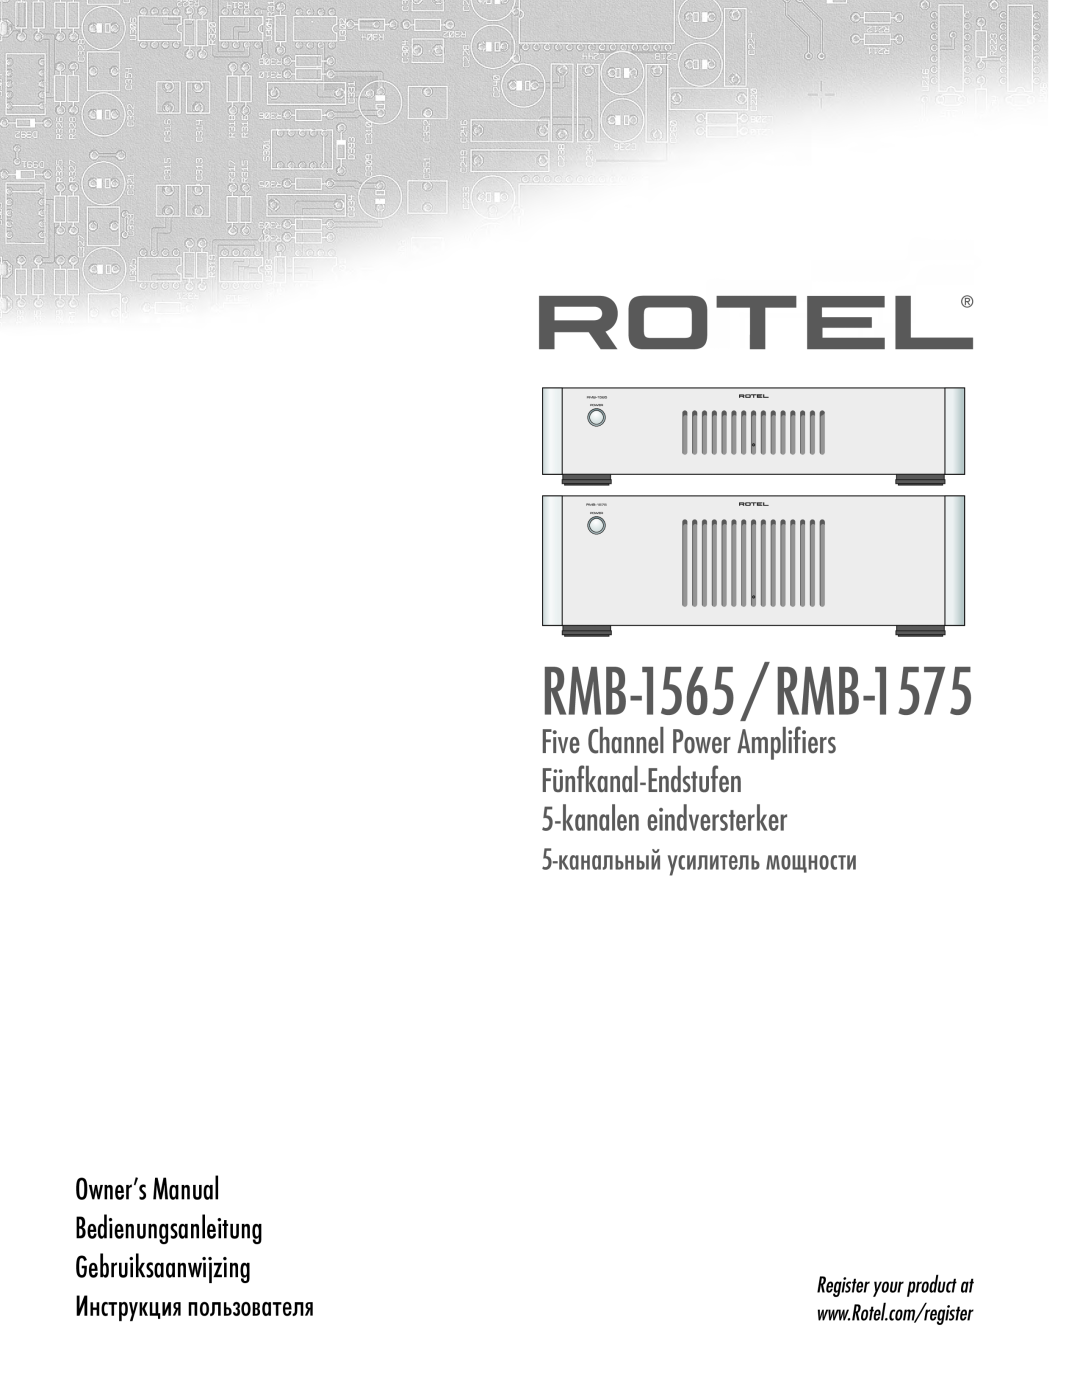 Rotel RMB1575BK manual RMB-1565 / RMB-1575, kanaleneindversterker, 5-канальныйусилитель мощности, Gebruiksaanwijzing 